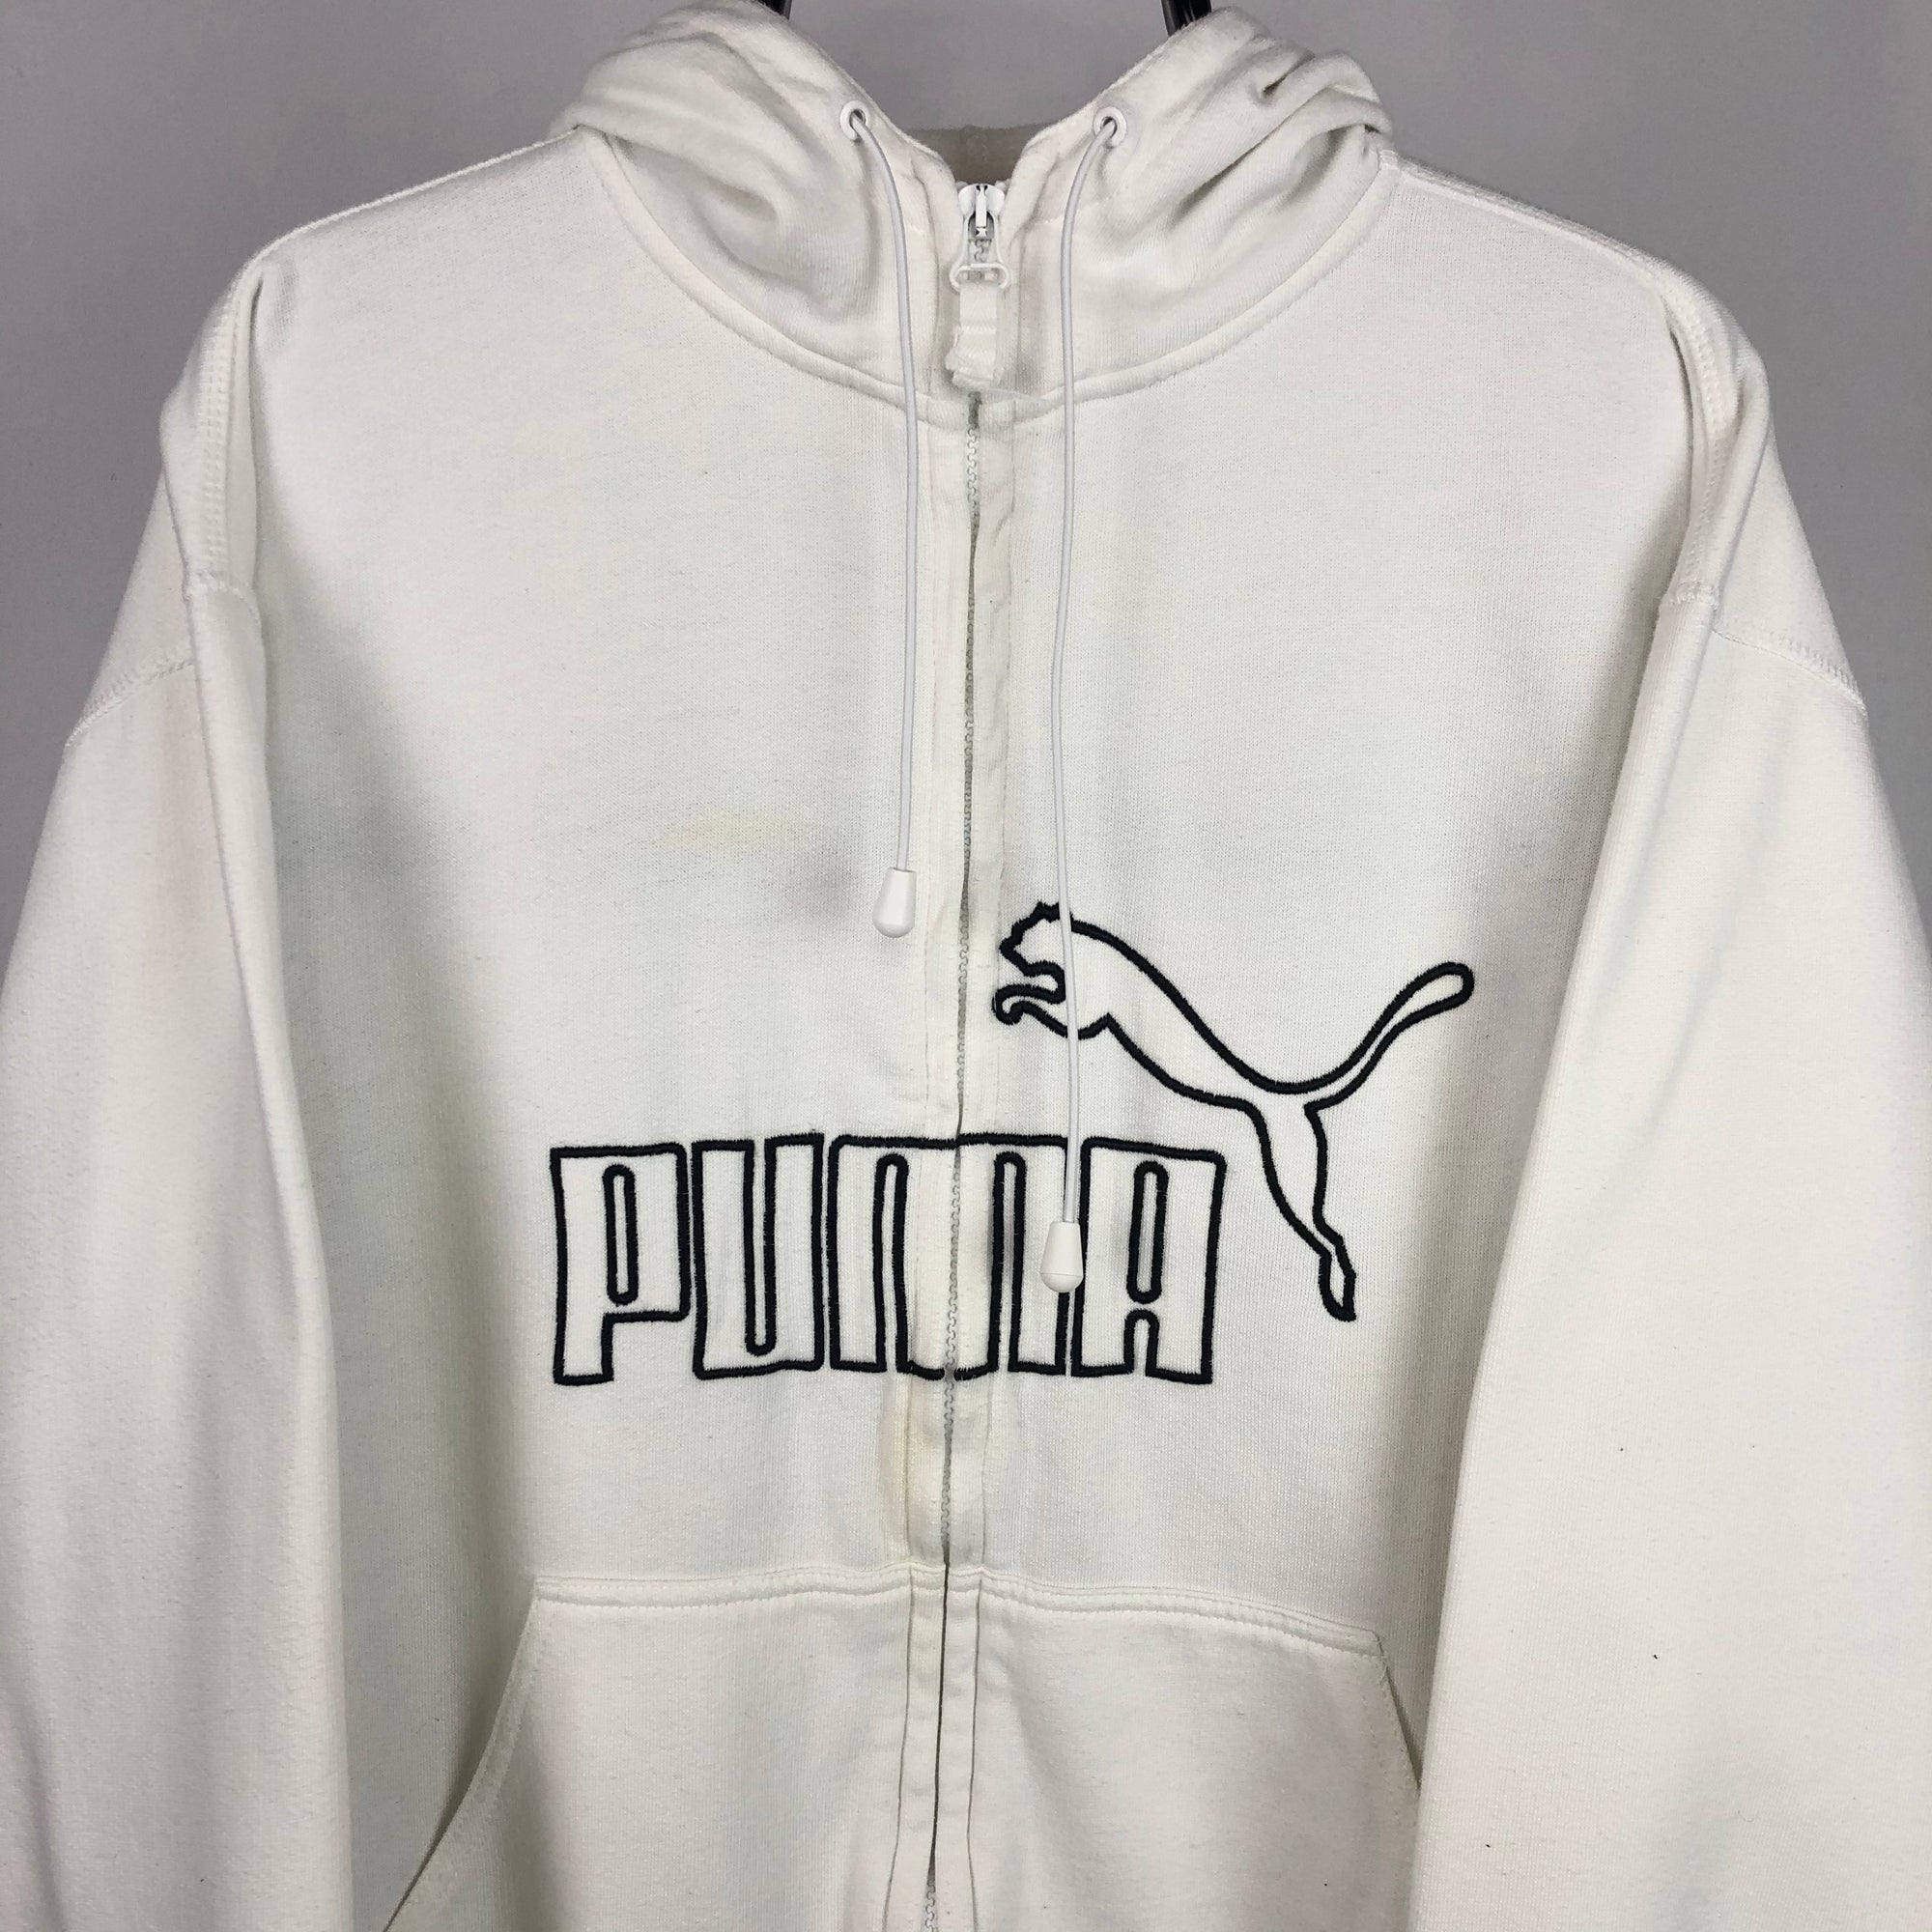 Puma Spellout Zip Hoodie in White - Men's Medium/Women's Large